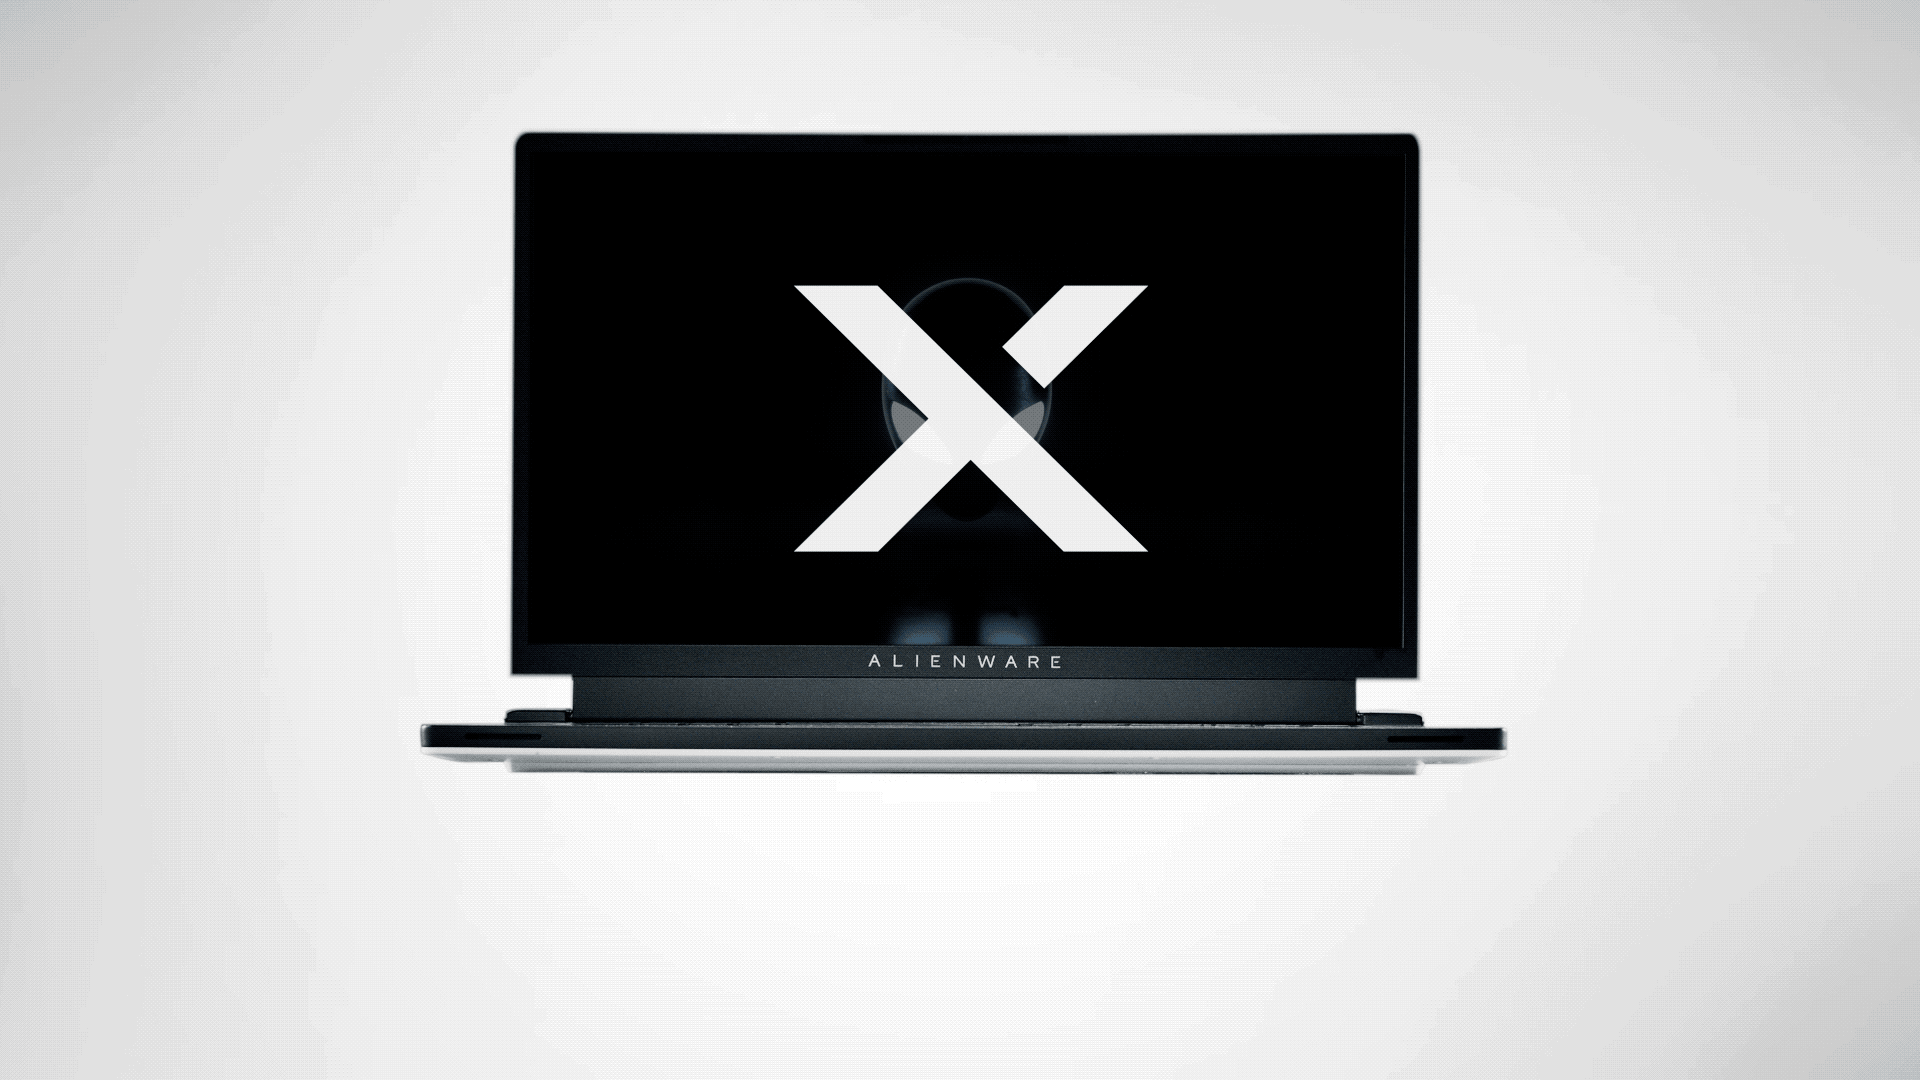 new alienware x series laptop - لپ تاپ m15 R6 الین ور با سخت افزار قدرتمند رونمایی شد